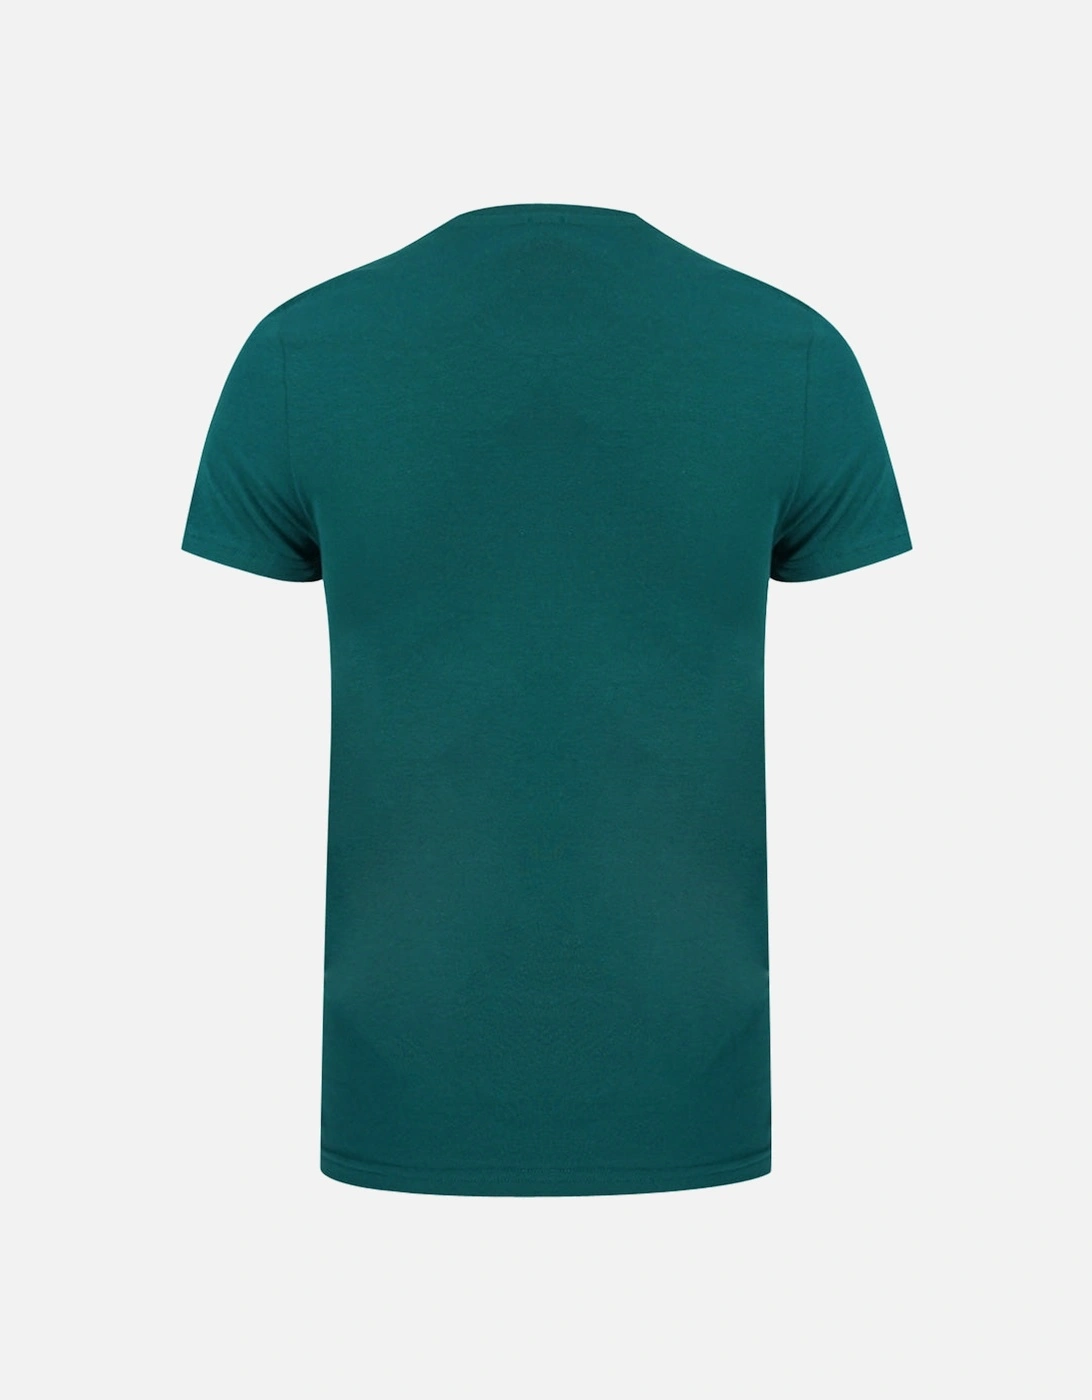 Aldis Logo Green T-Shirt